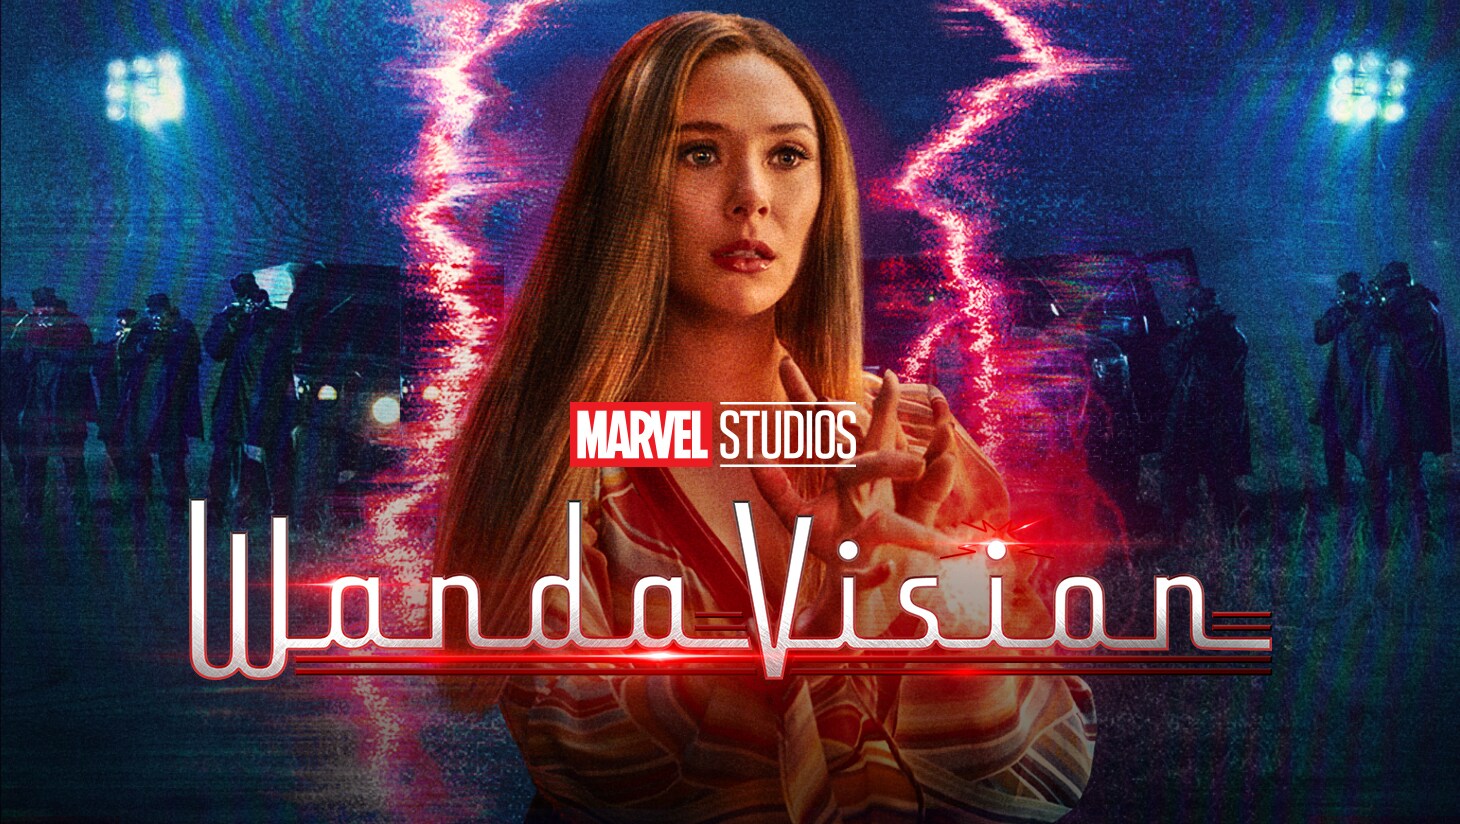 Marvel Studios' WandaVision